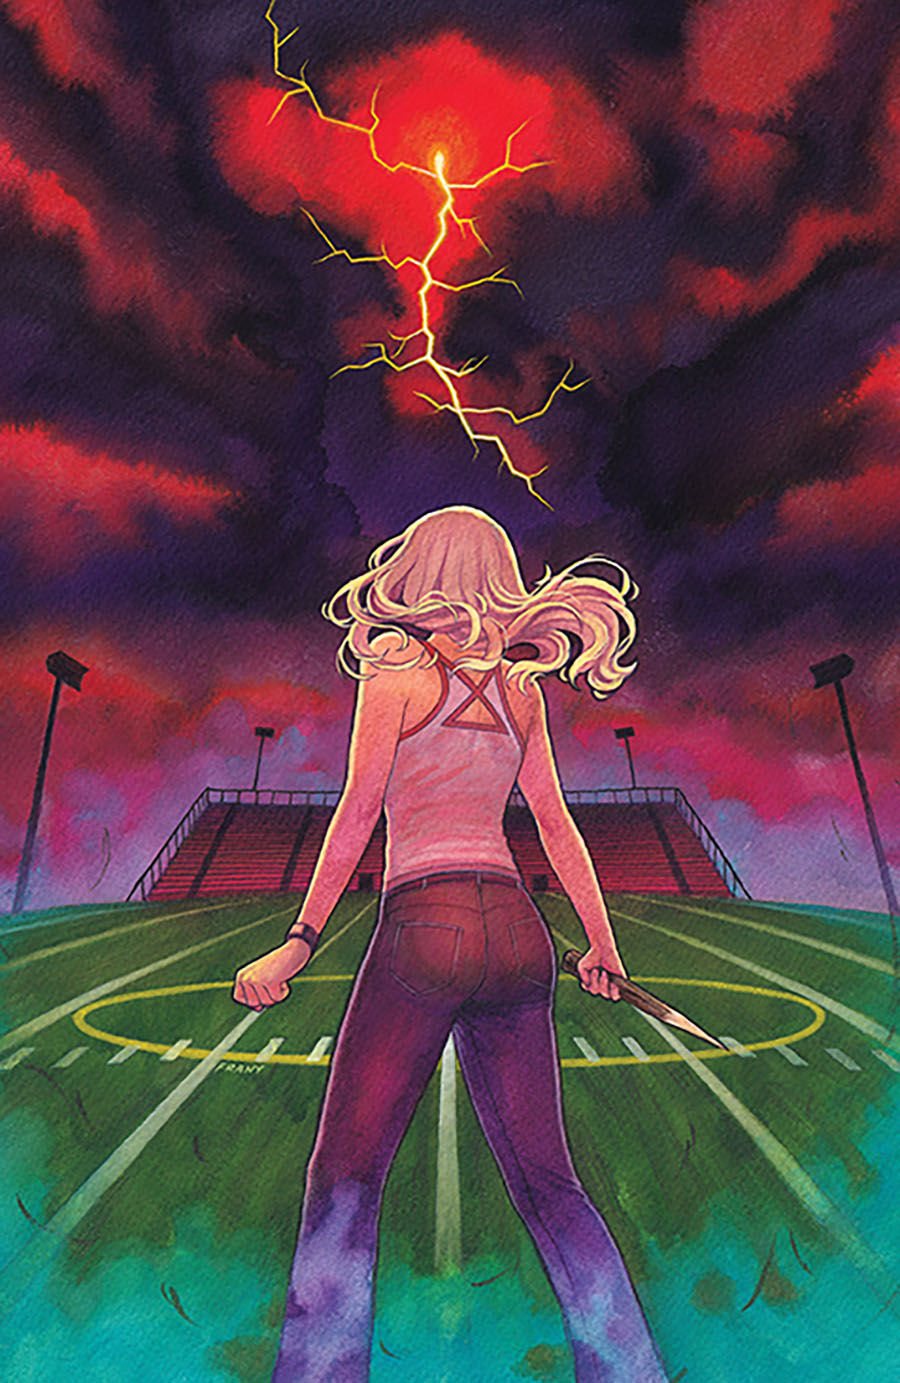 Buffy The Vampire Slayer Vol 2 #32 Cover C Incentive Frany Virgin Cover